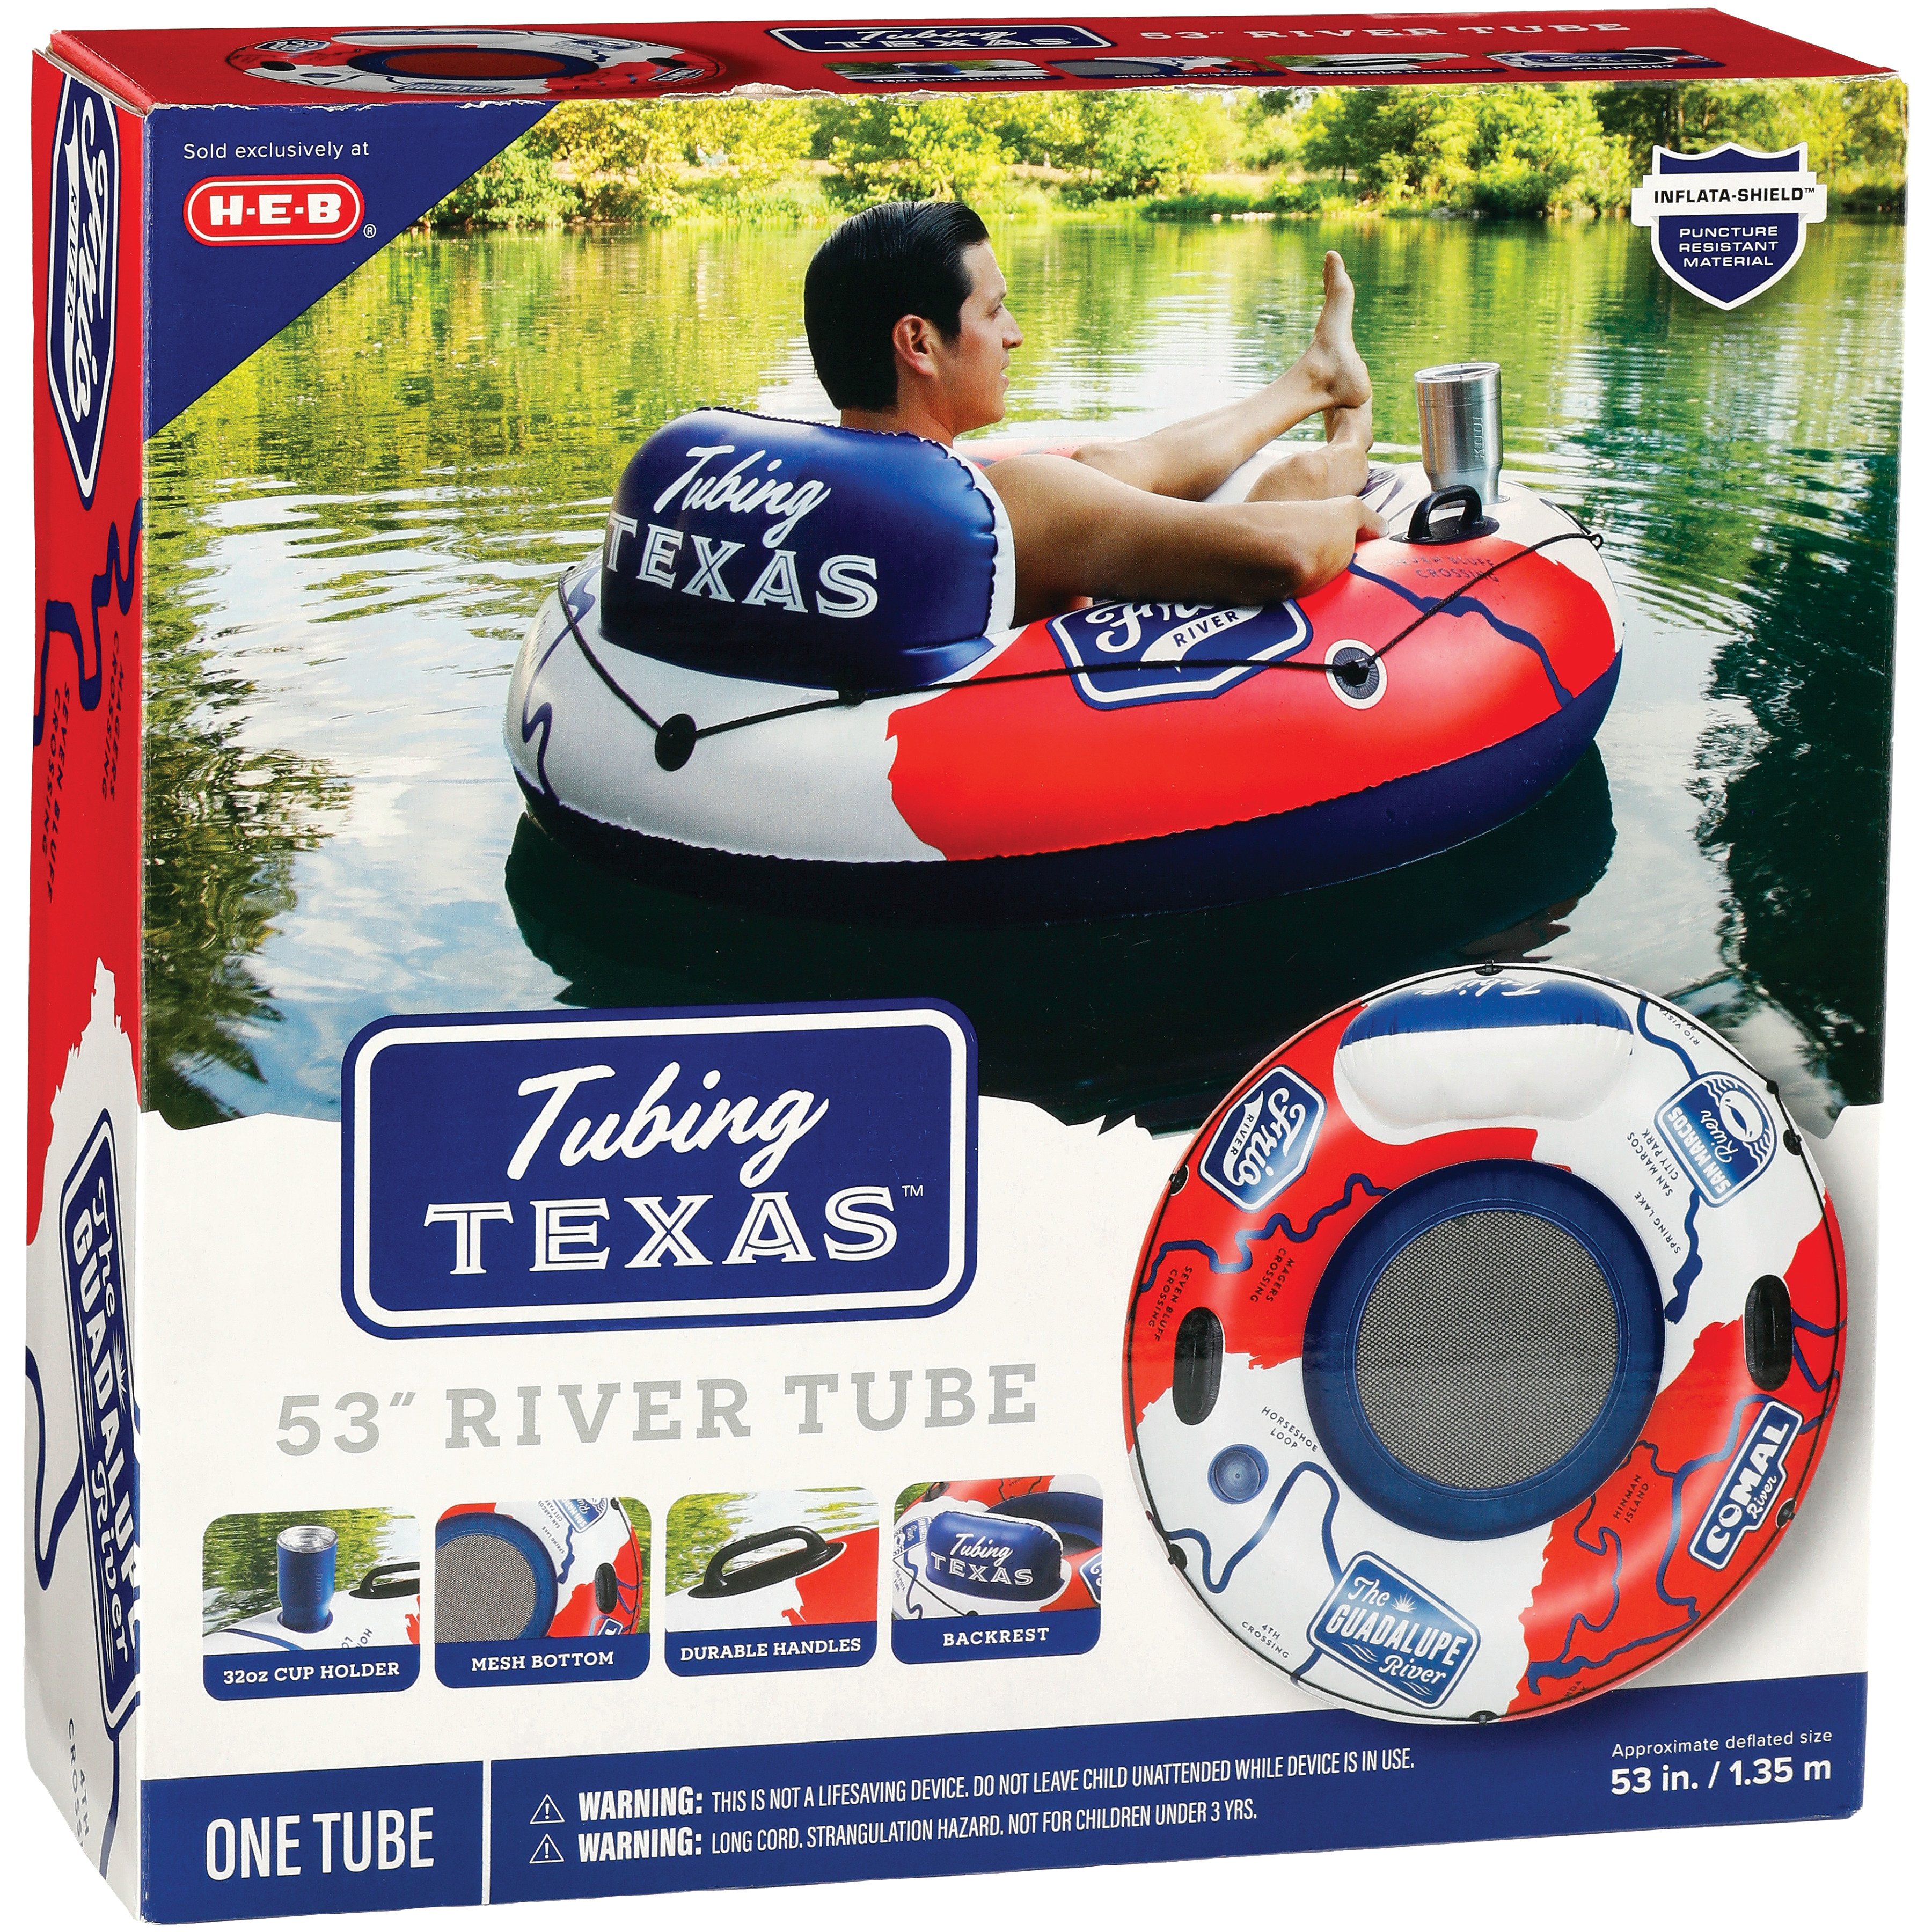 H-E-B Tubing Texas Inflatable River Tube - Red